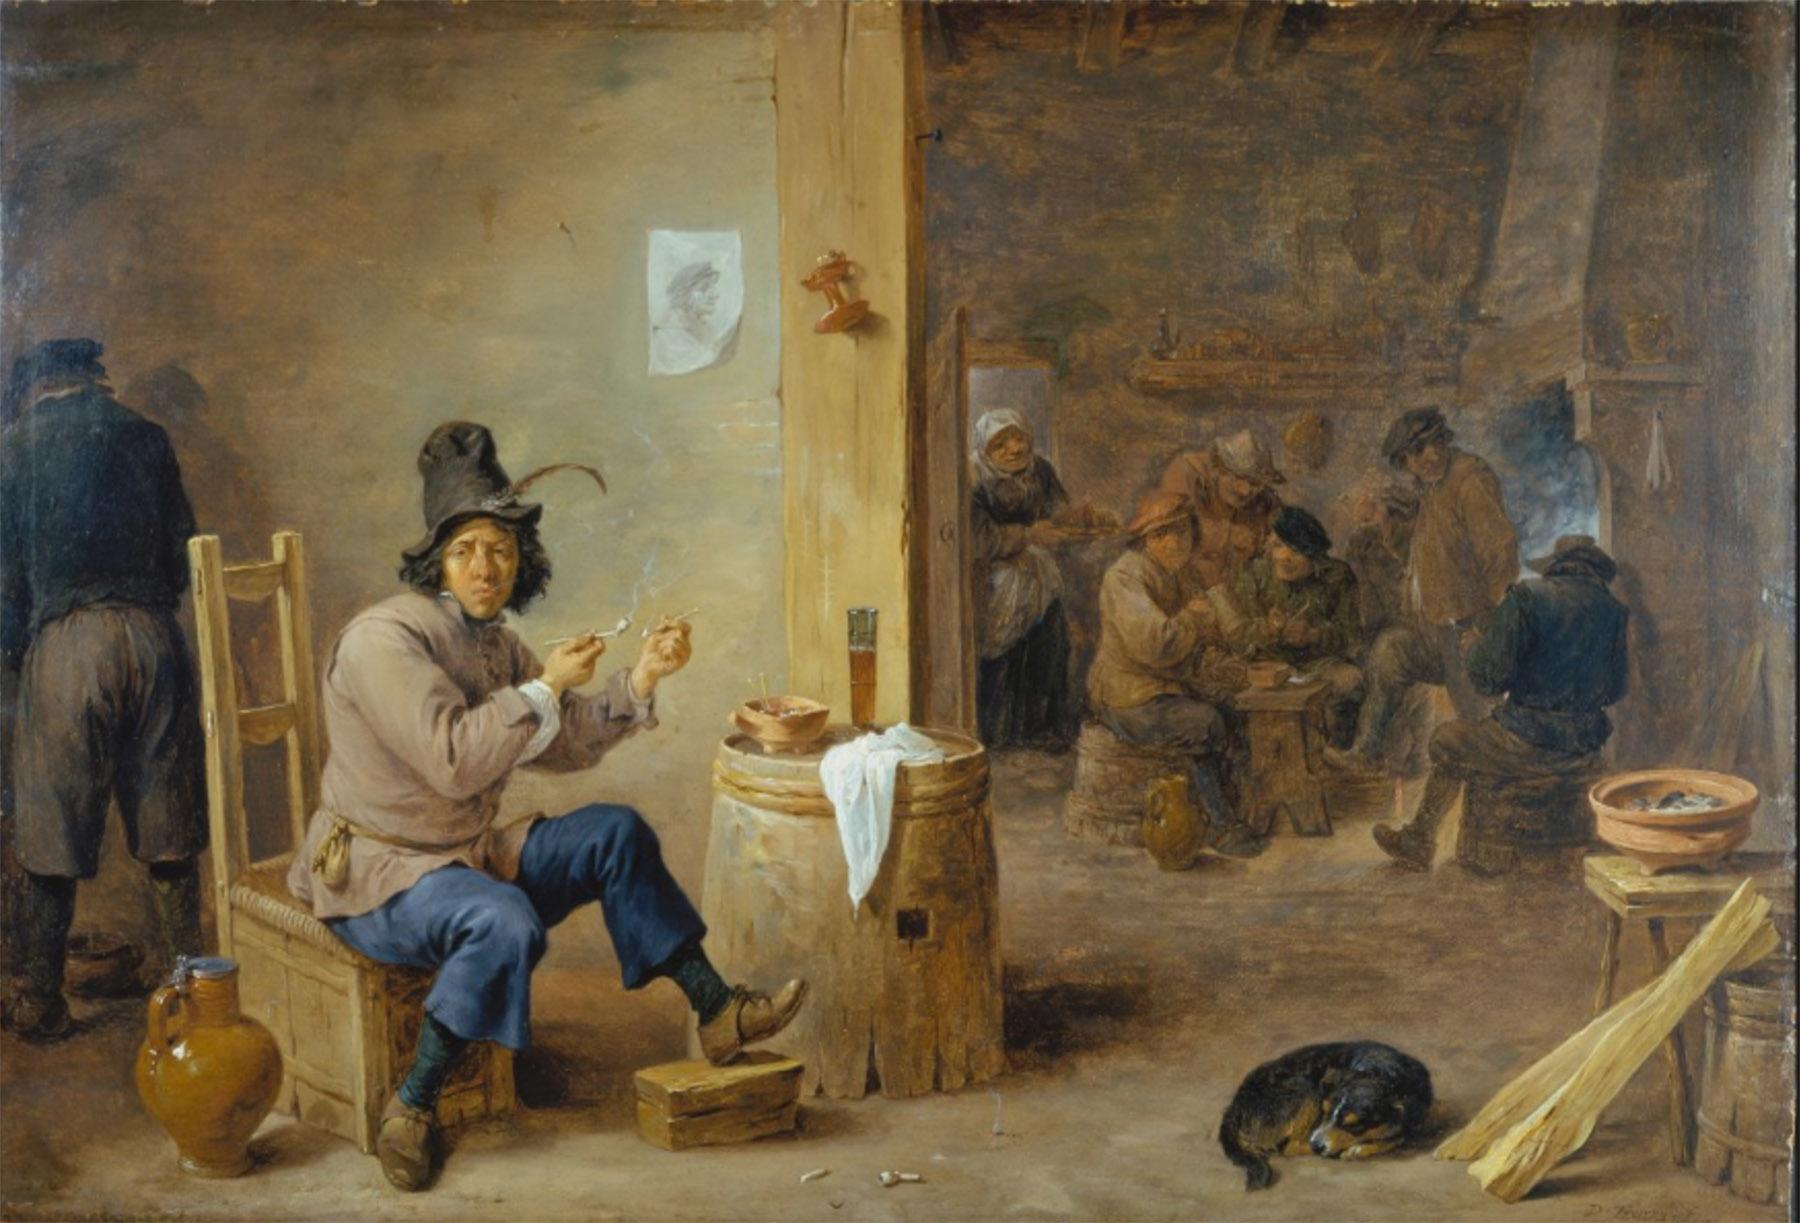 teniers-smoker-at-an-inn-c-1659.jpg